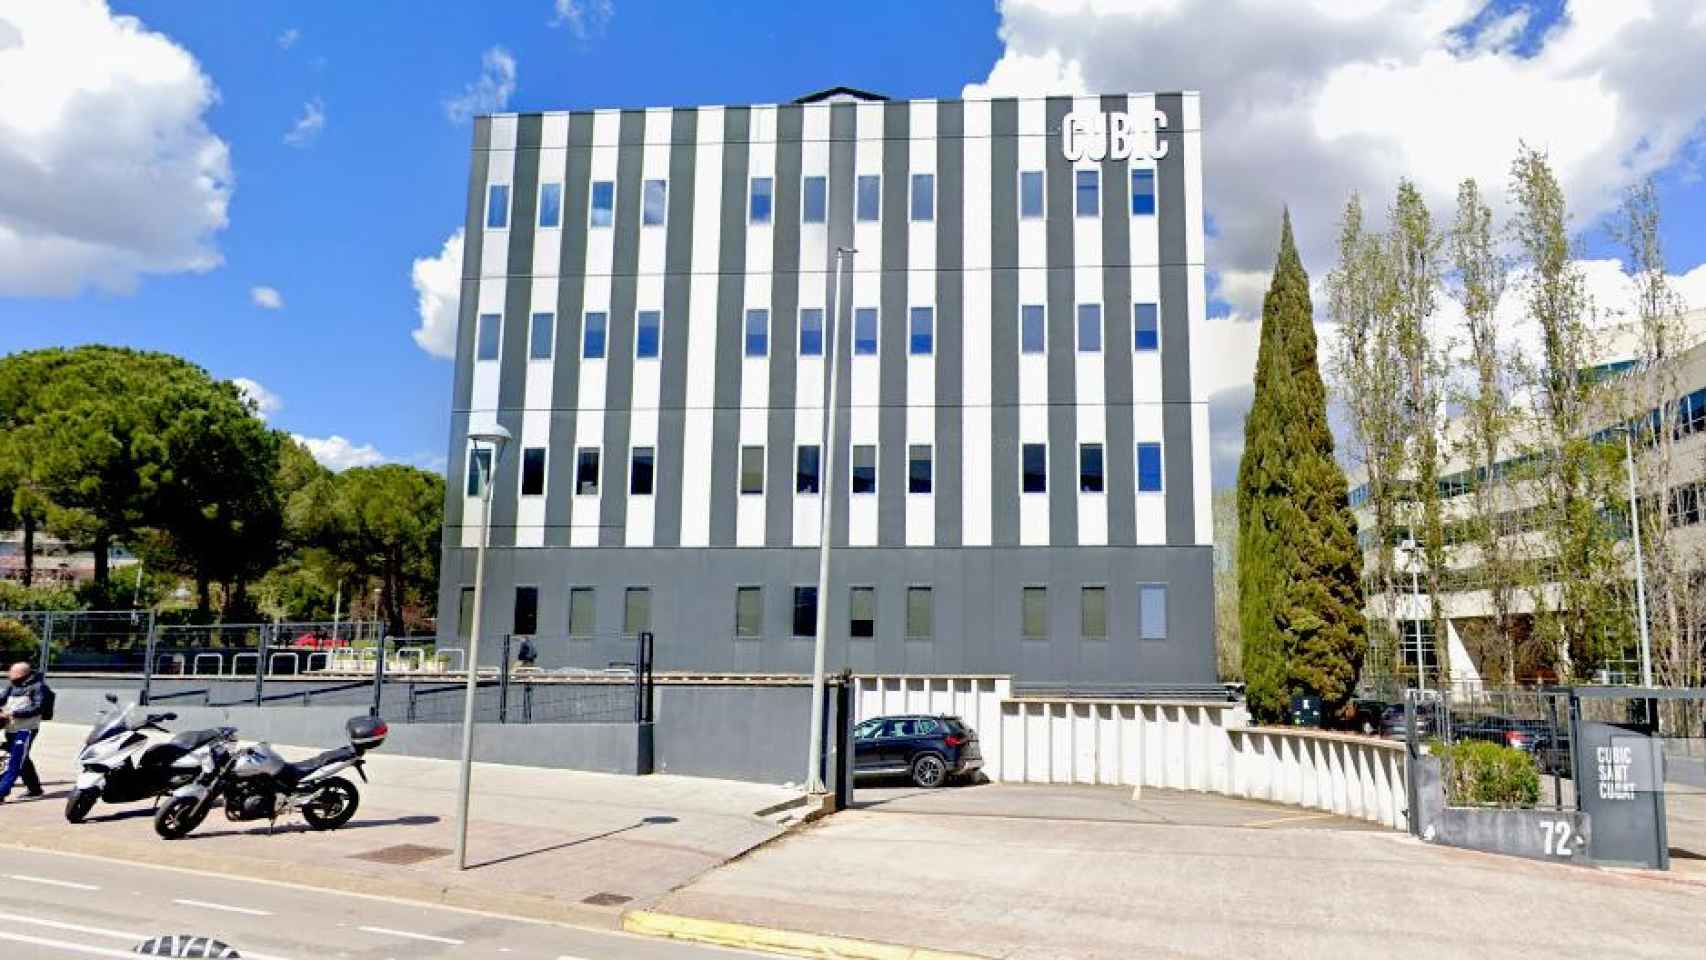 Tech Media Telecom Factory, agencia de marketing digital en el edificio Cubic de Sant Cugat del Vallès. Quiebras